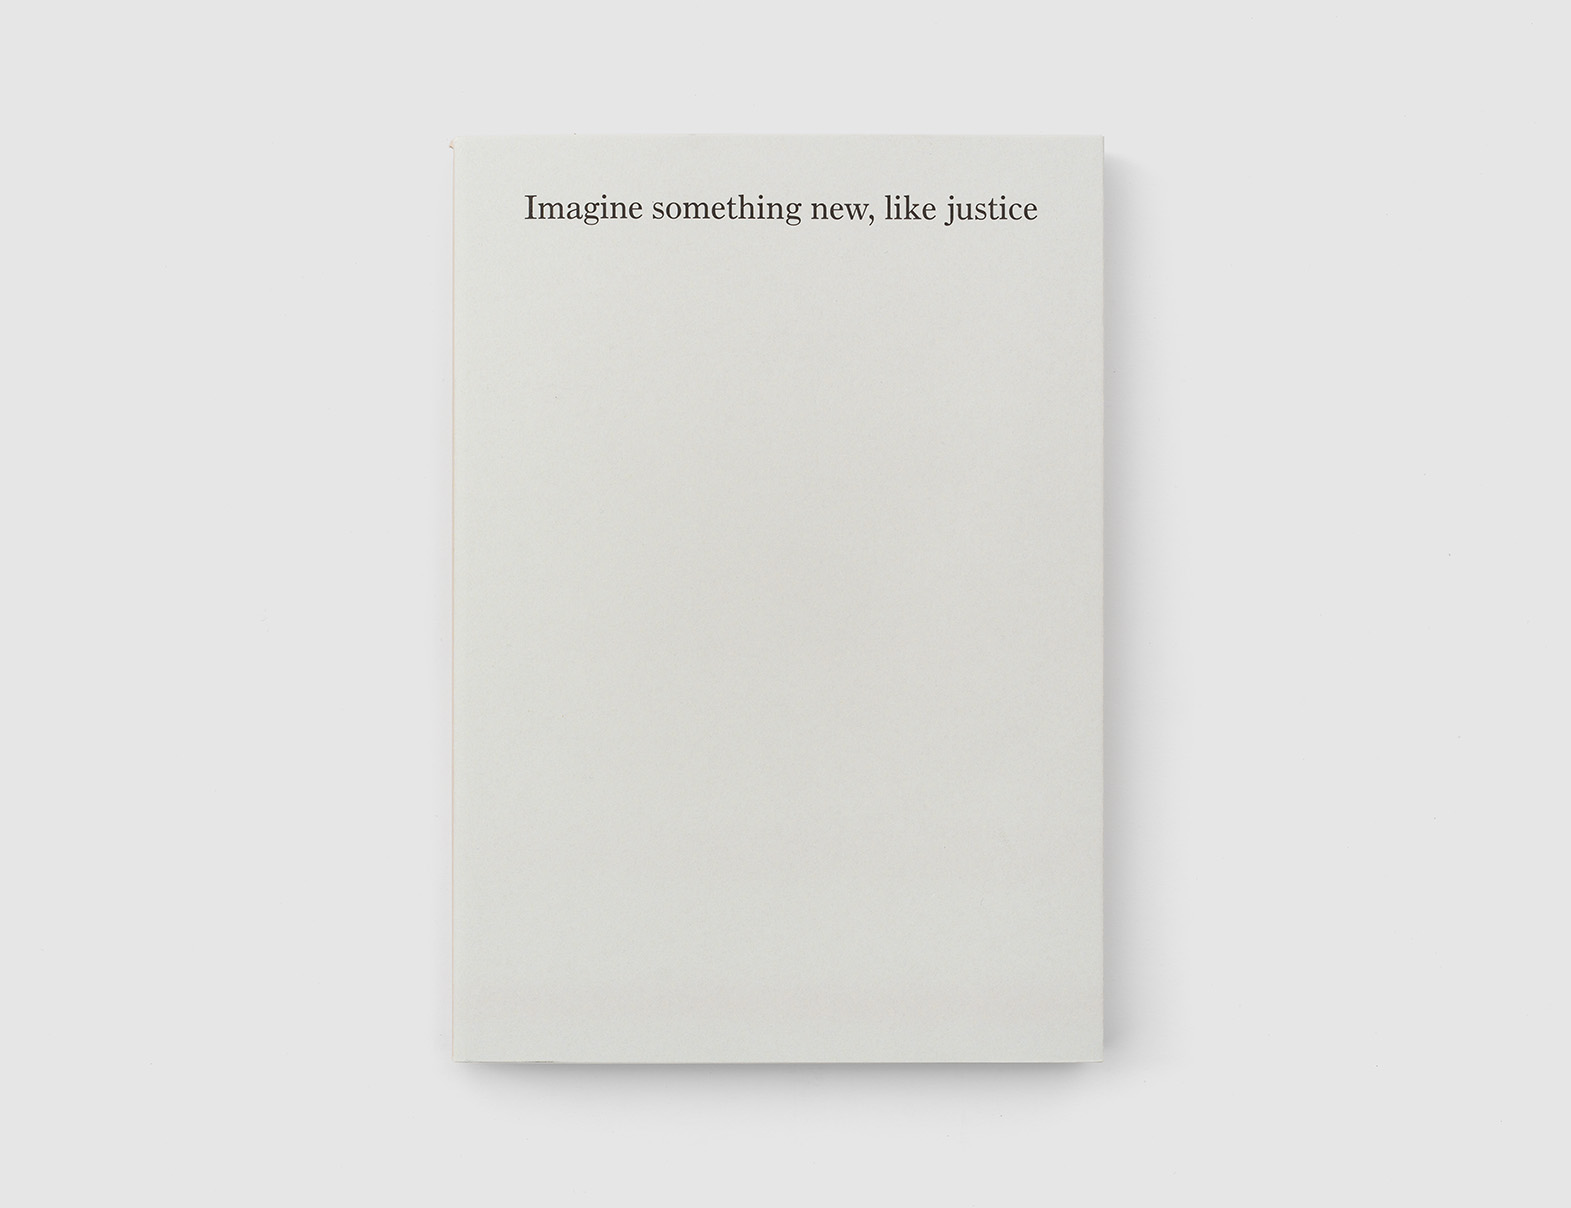 Imagine something new like justice